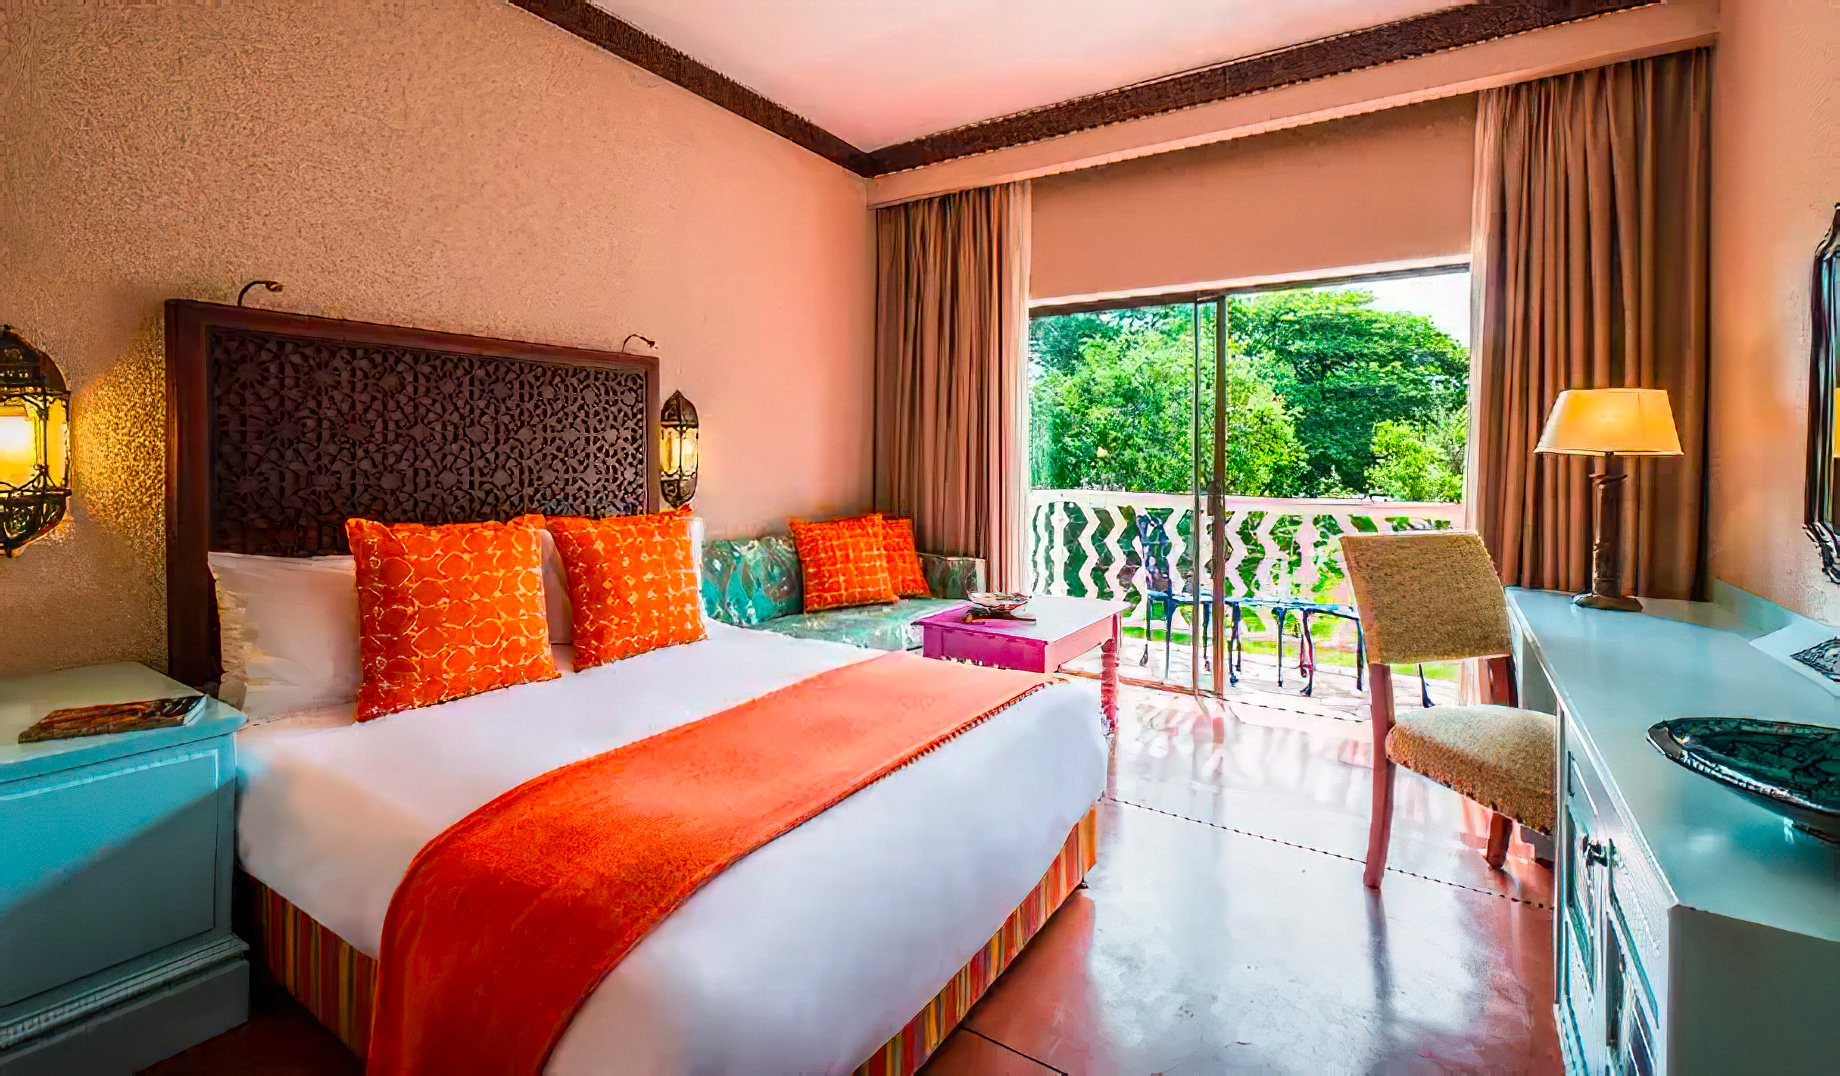 Avani Victoria Falls Resort – Livingstone, Zambia – Garden Room